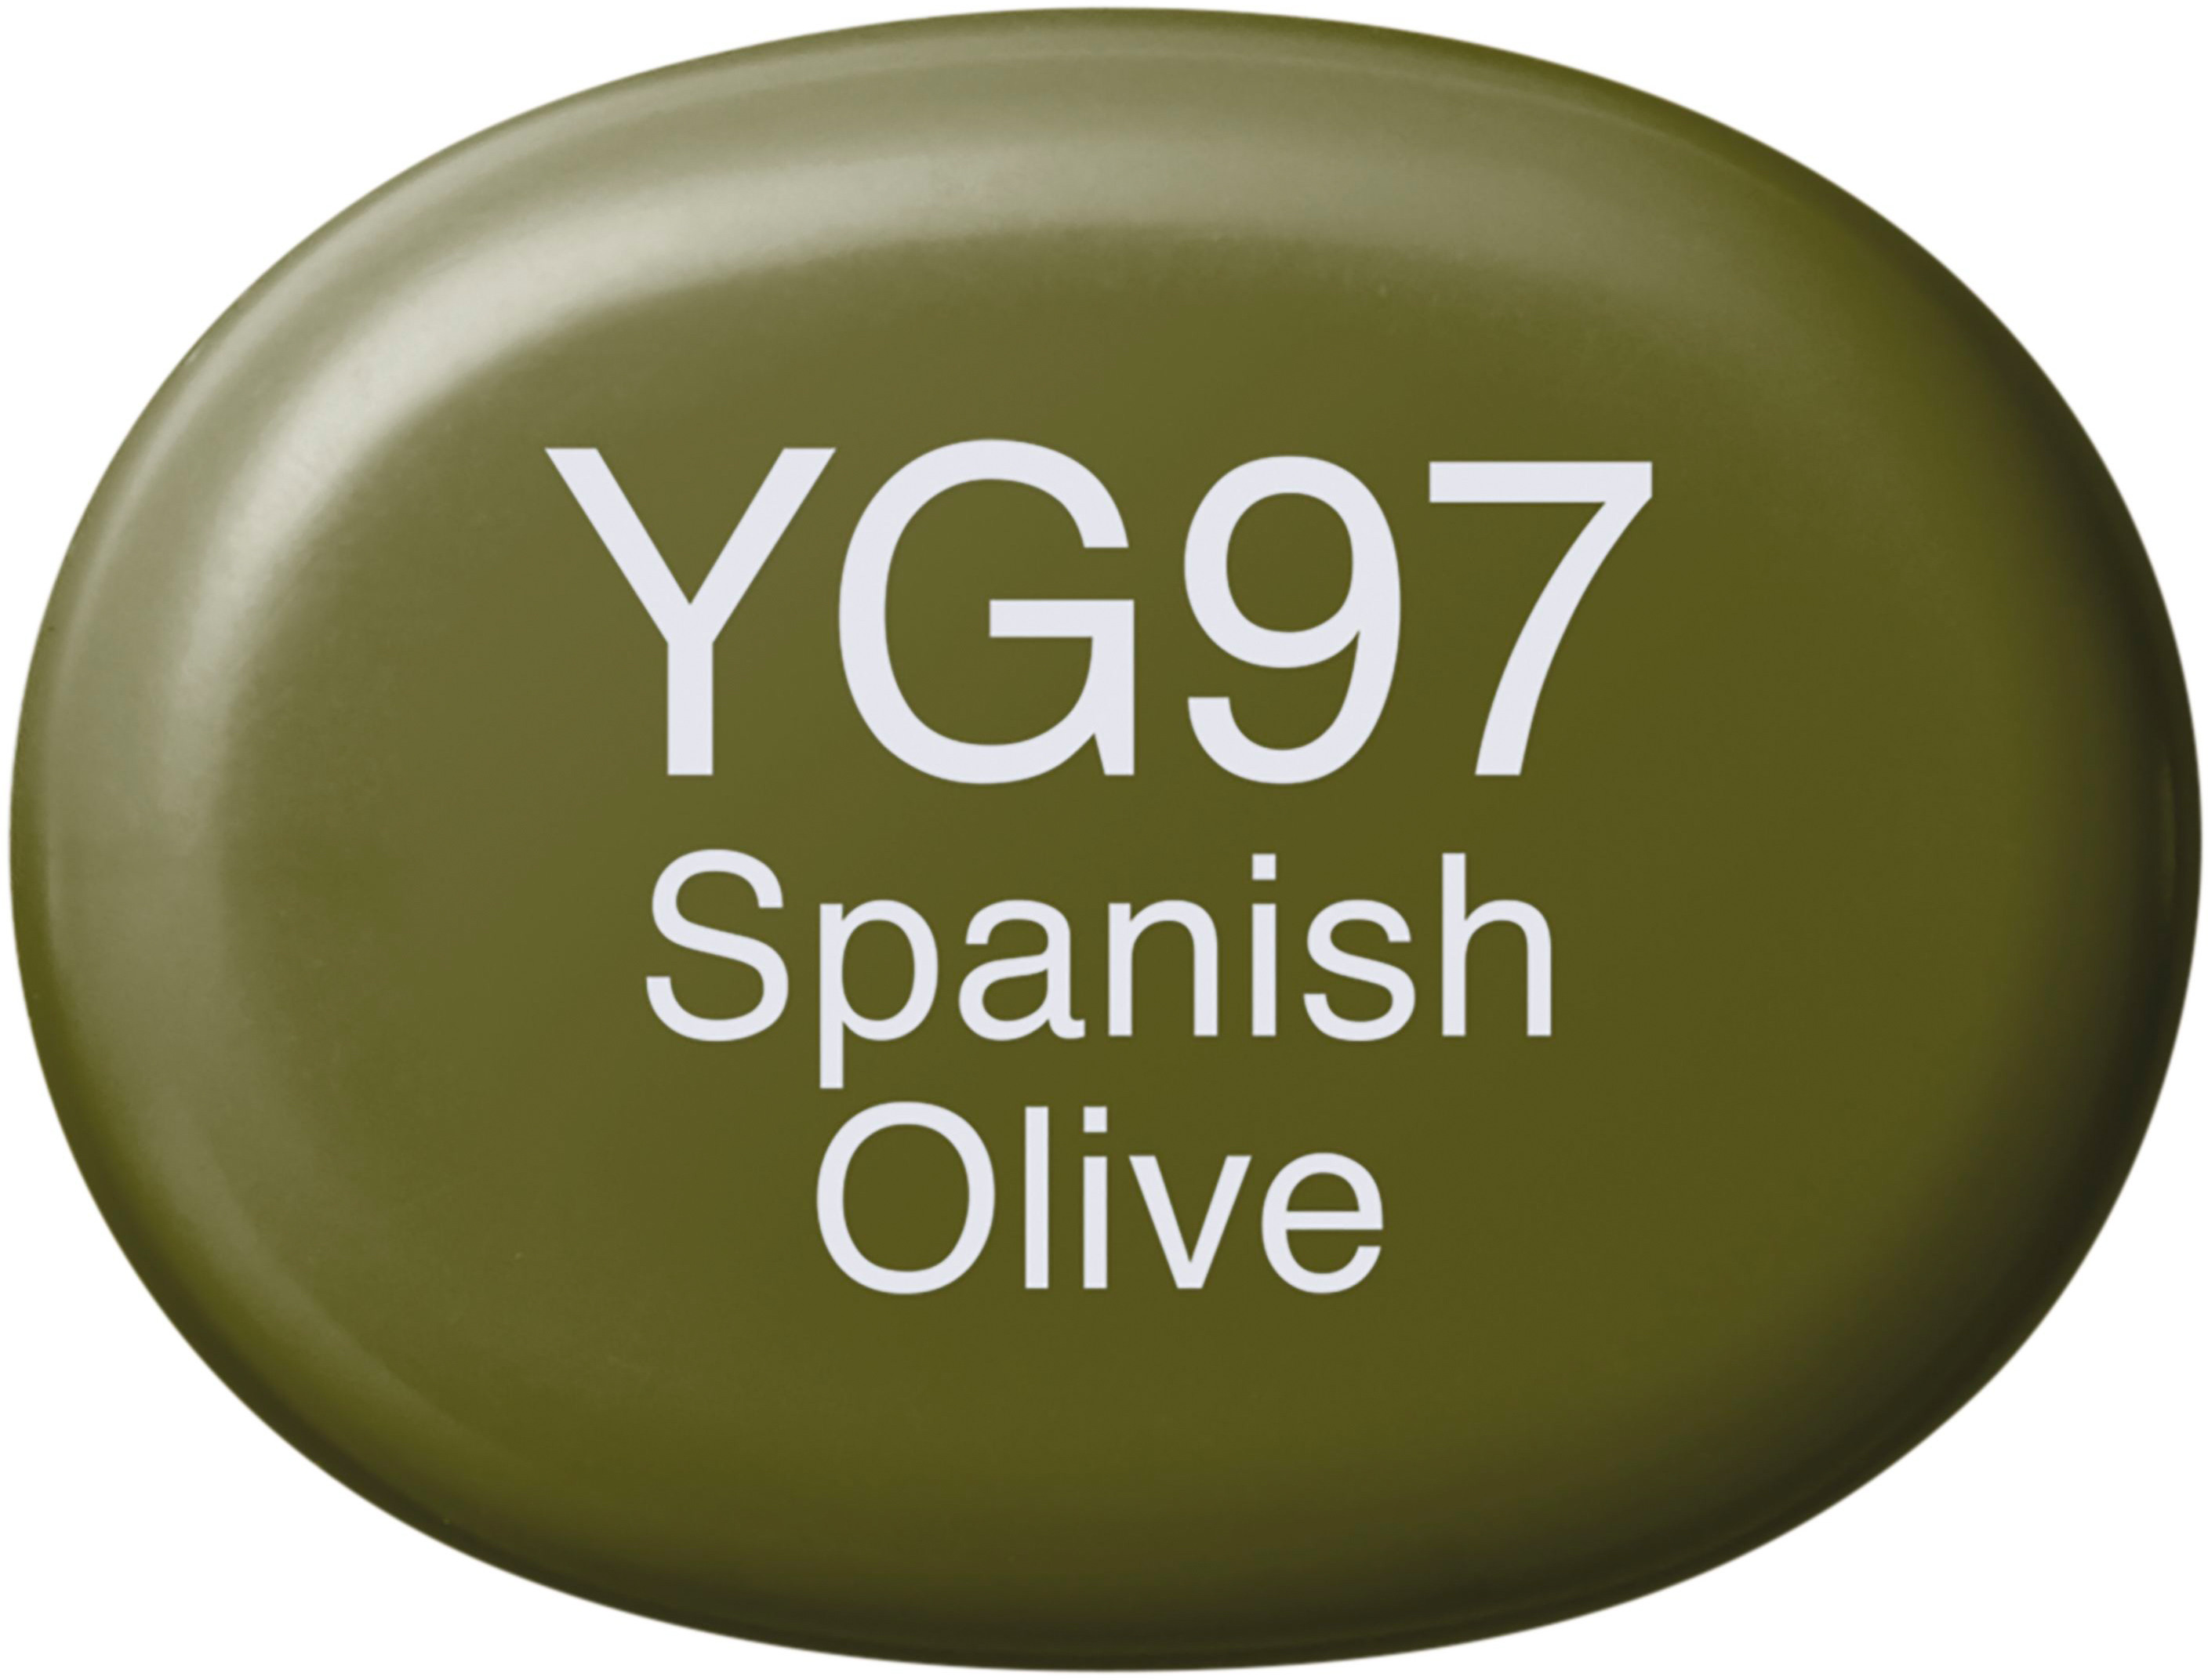 COPIC Marker Sketch 2107559 YG97 - Spanish Olive